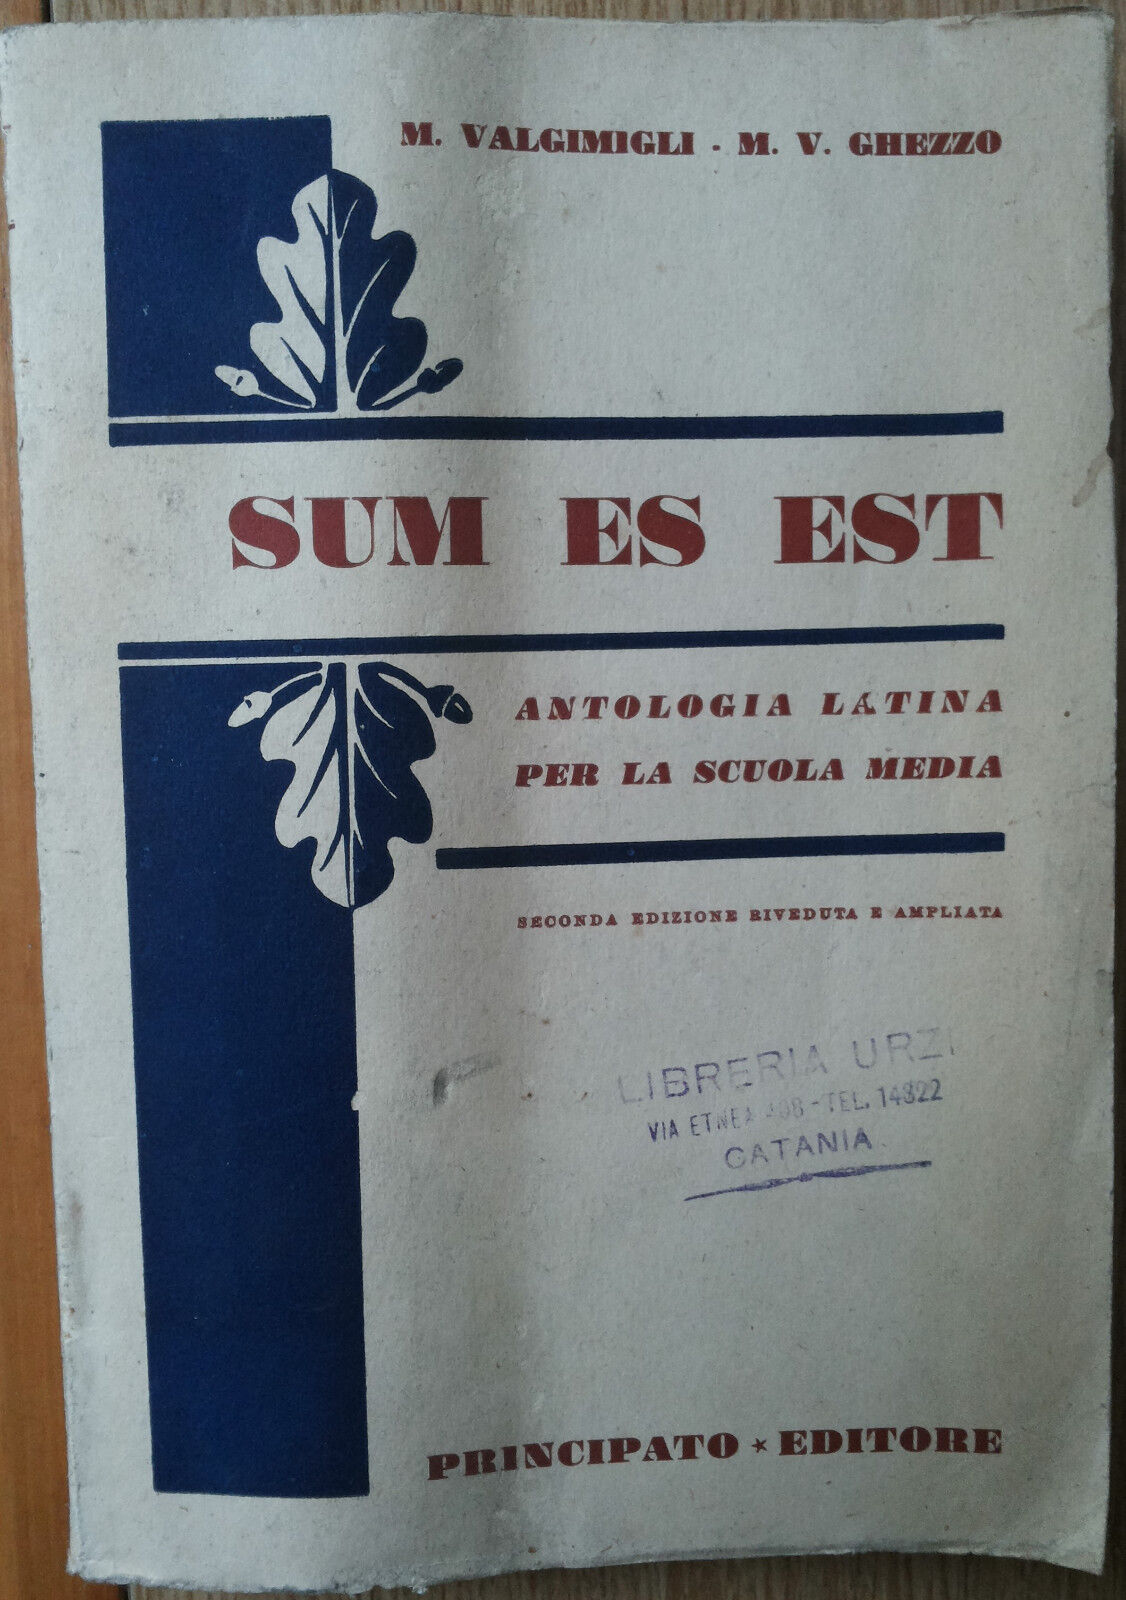 Sum es est - Valgimigli, Ghezzo - Casa Editrice Giuseppe Principato,1955 - R